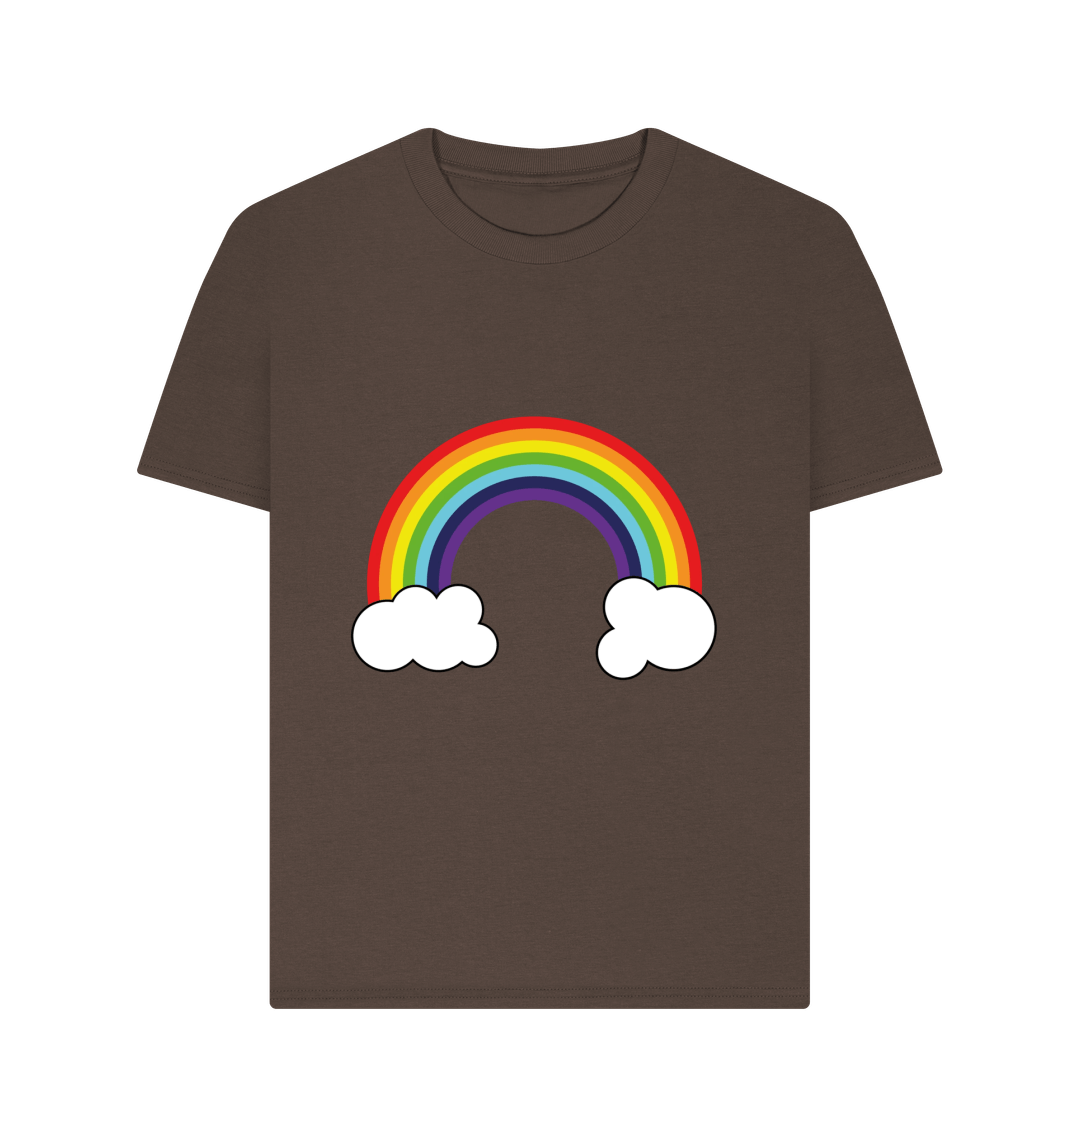 Chocolate Organic Cotton Rainbow Graphic Only Mental Health Women's T-Shirt